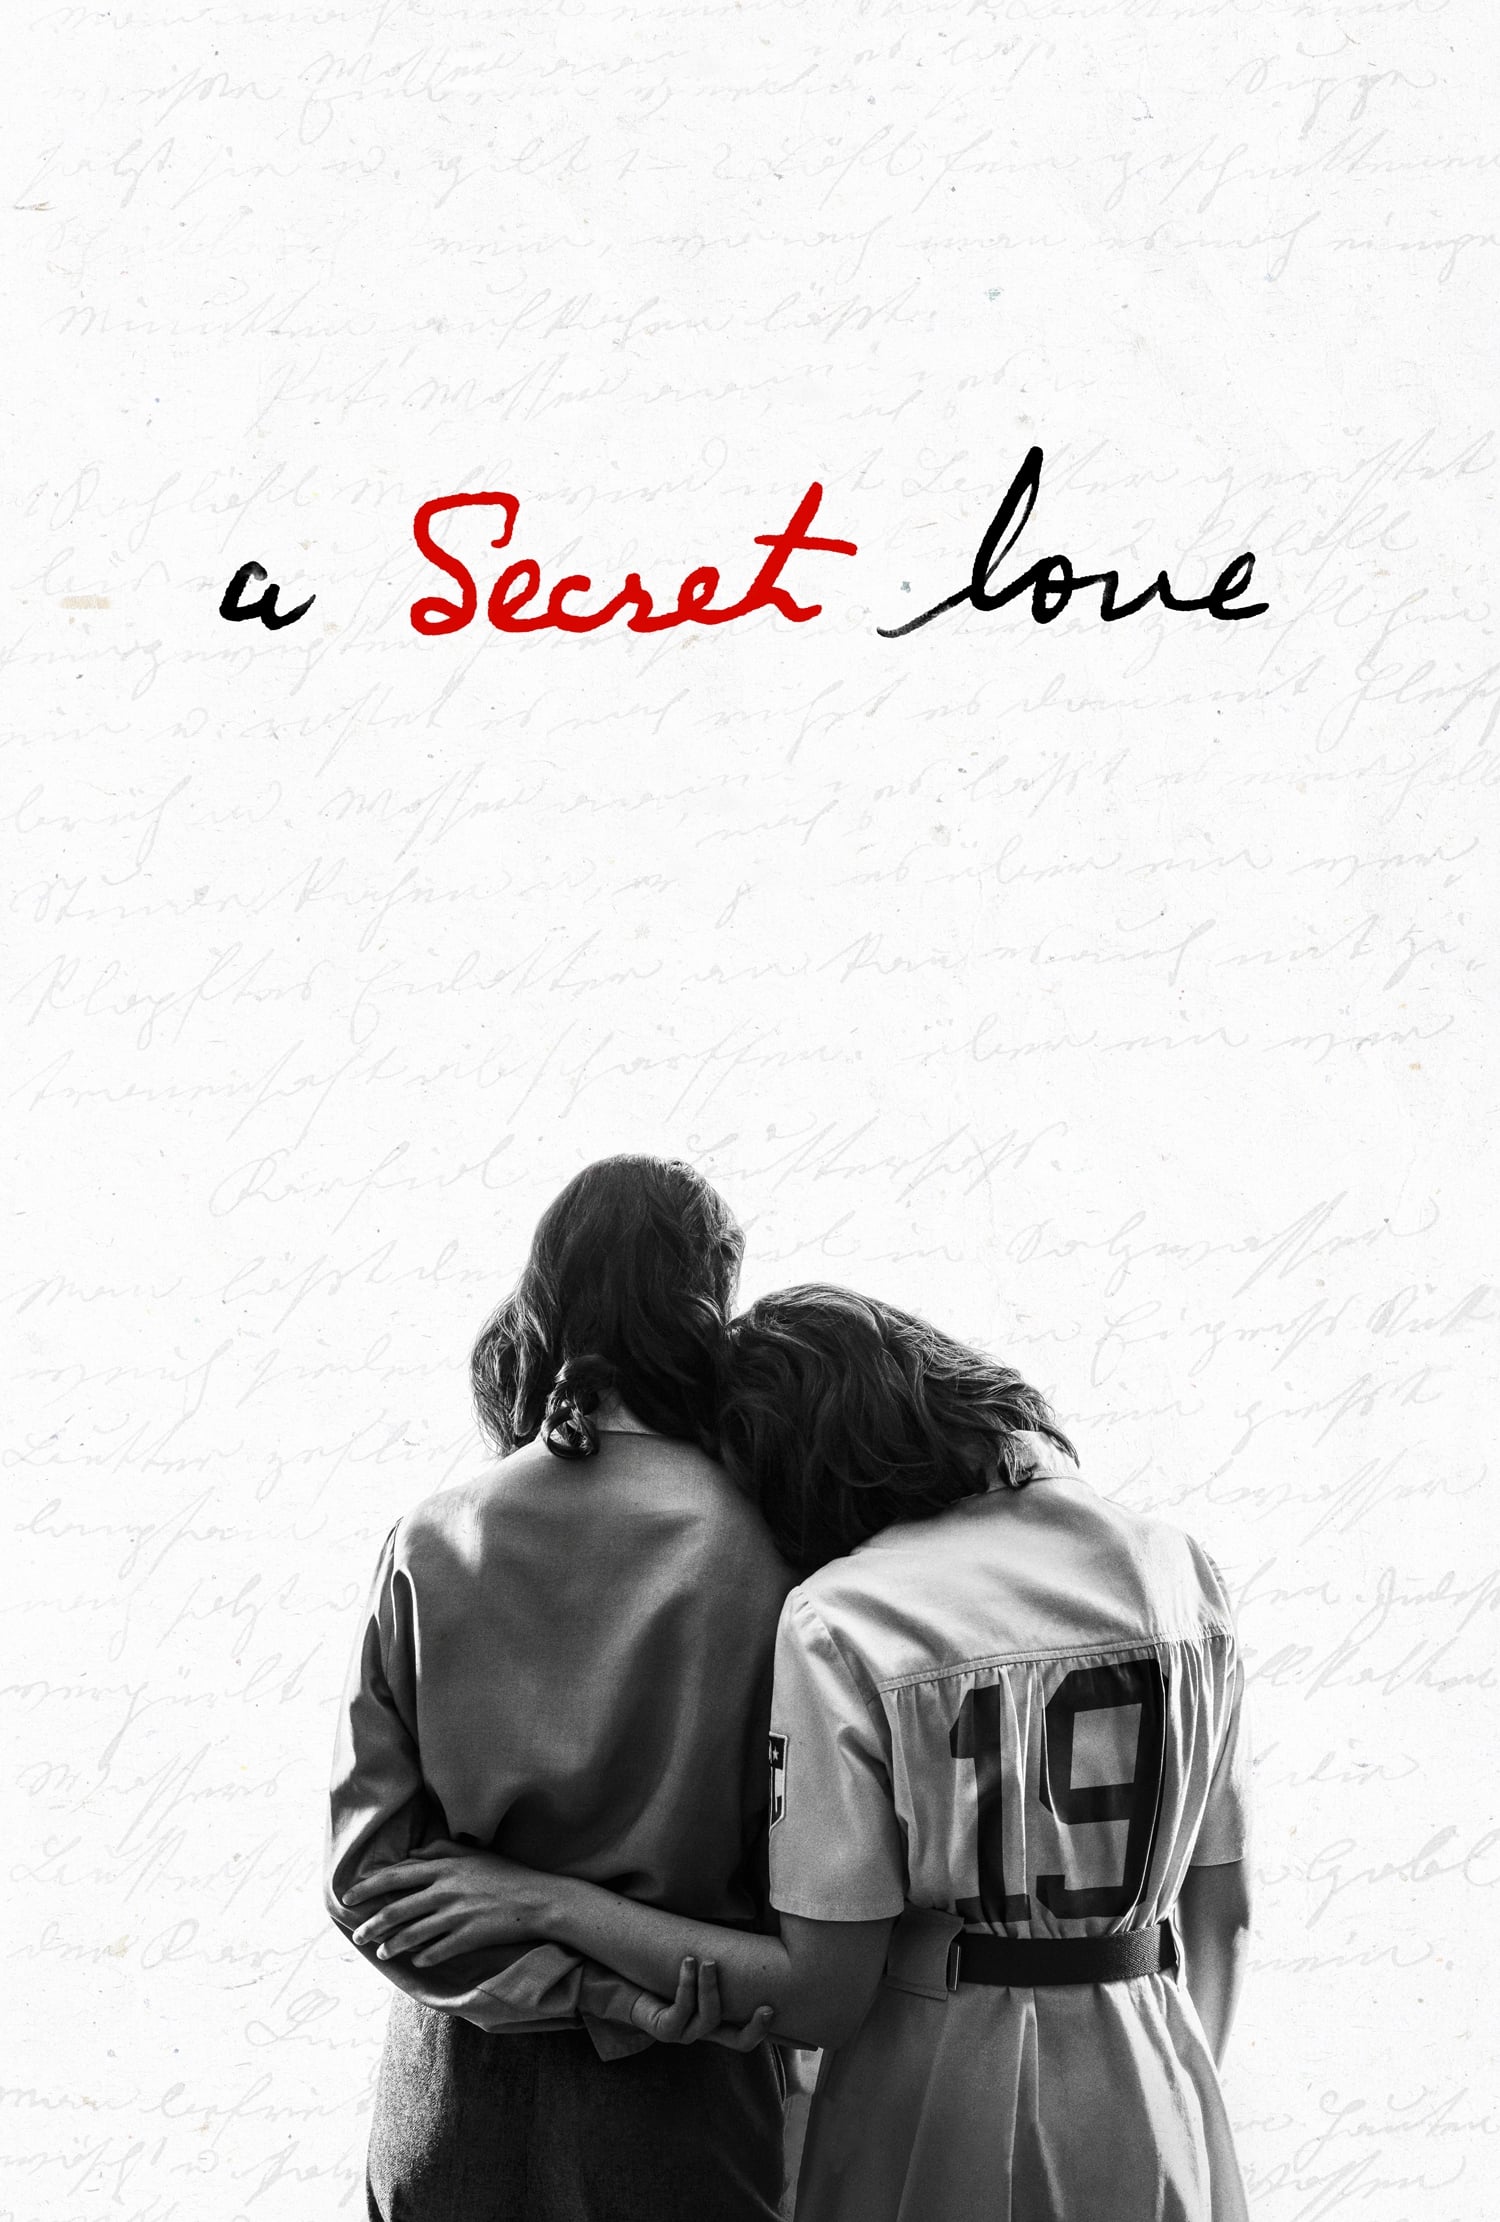 A Secret Love (2020)